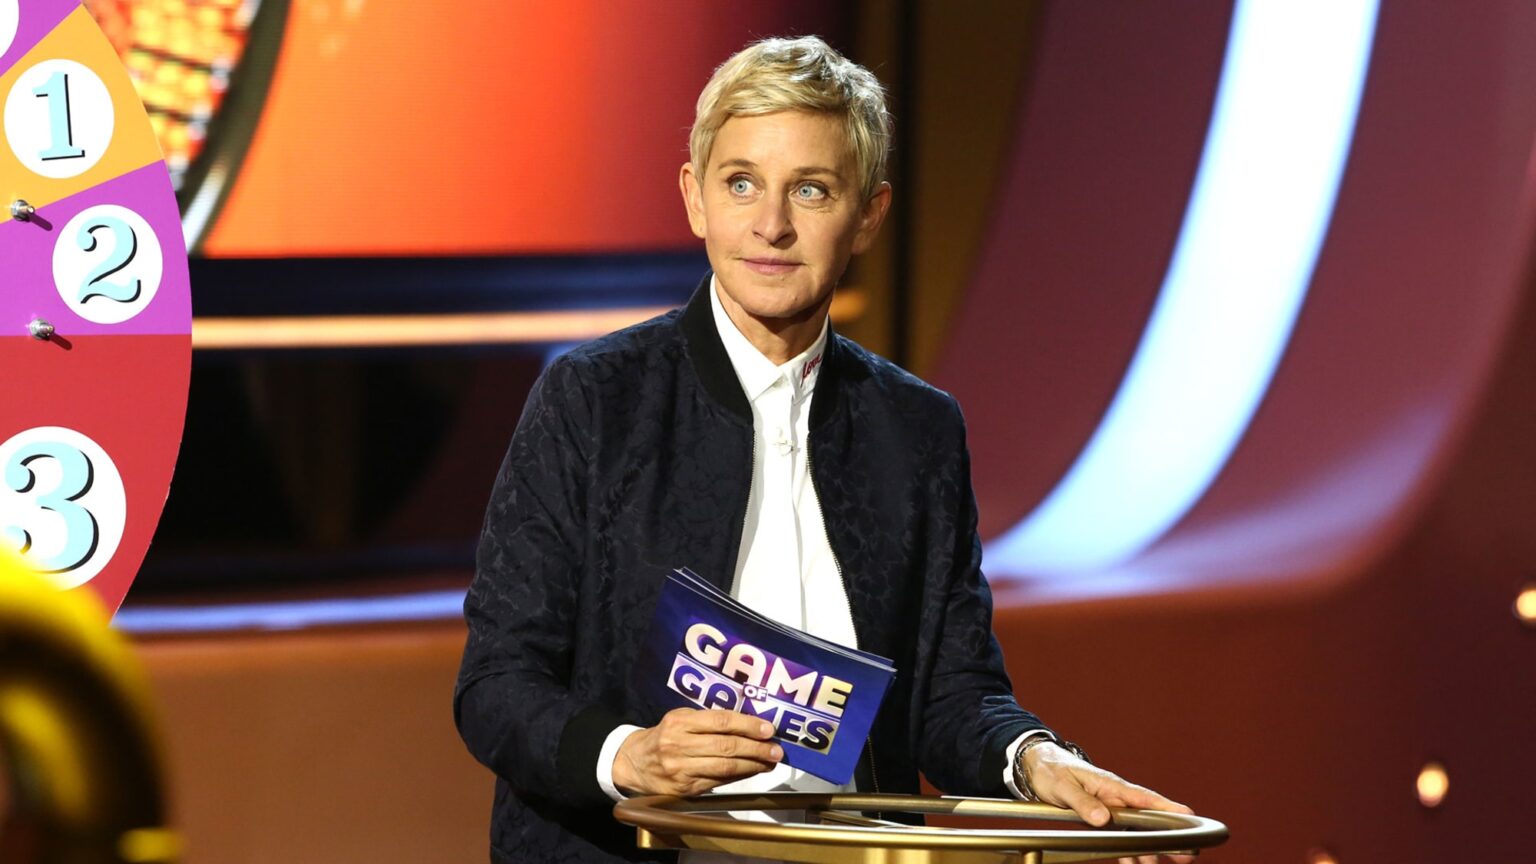 Ellen DeGeneres is best known for 'The Ellen DeGeneres Show', but has the comedian gained enough support for her newer series 'Ellen's Game of Games'?